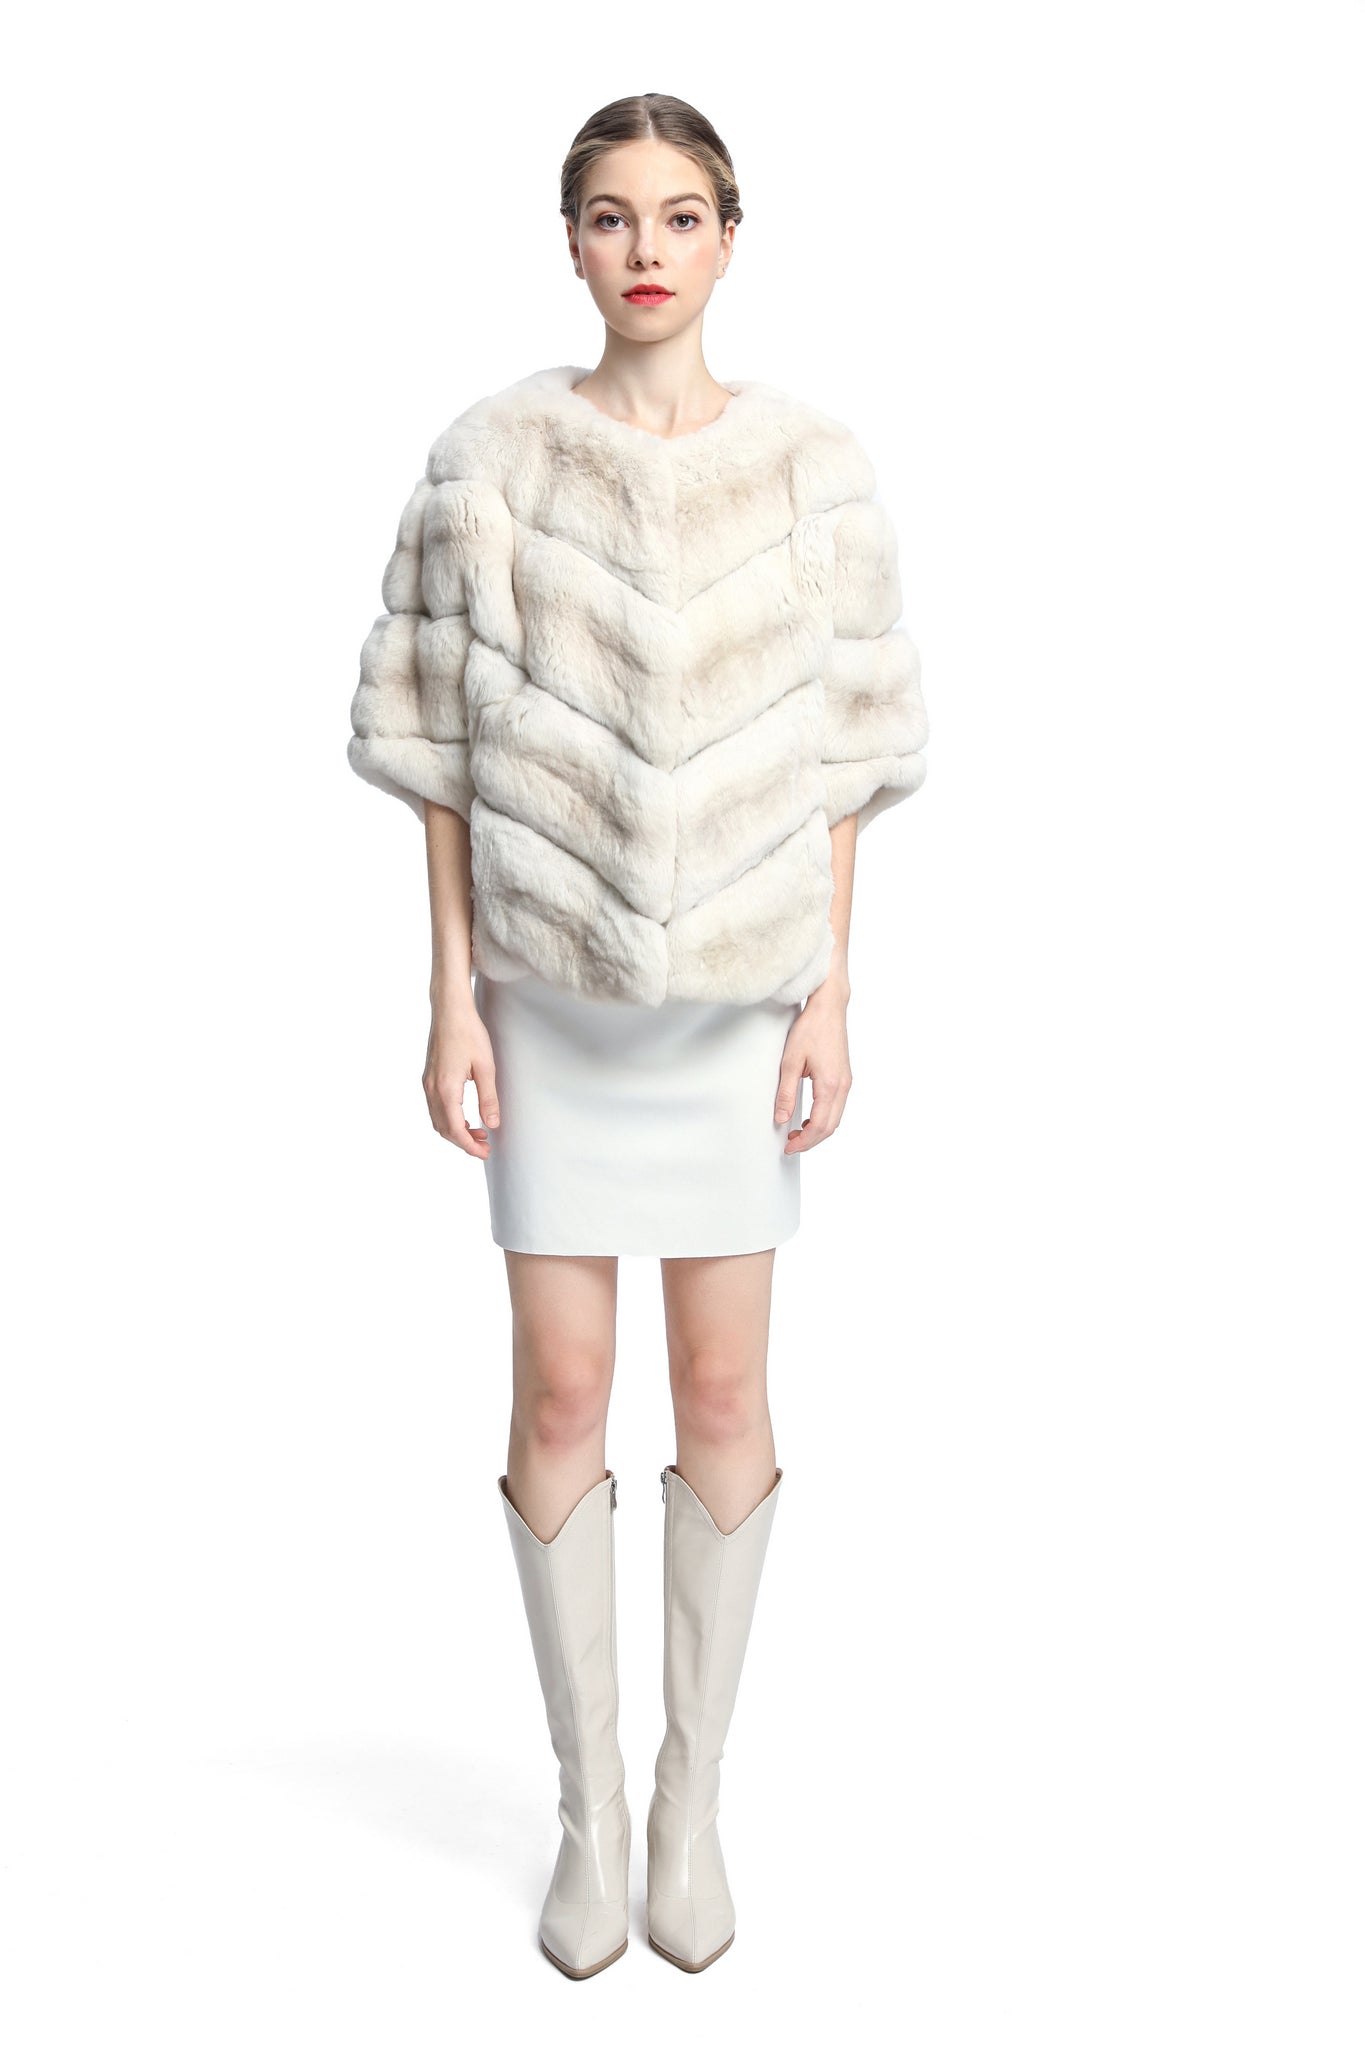 Stunning Chinchilla Fur Coat: Exude Elegance & Style This Winter!